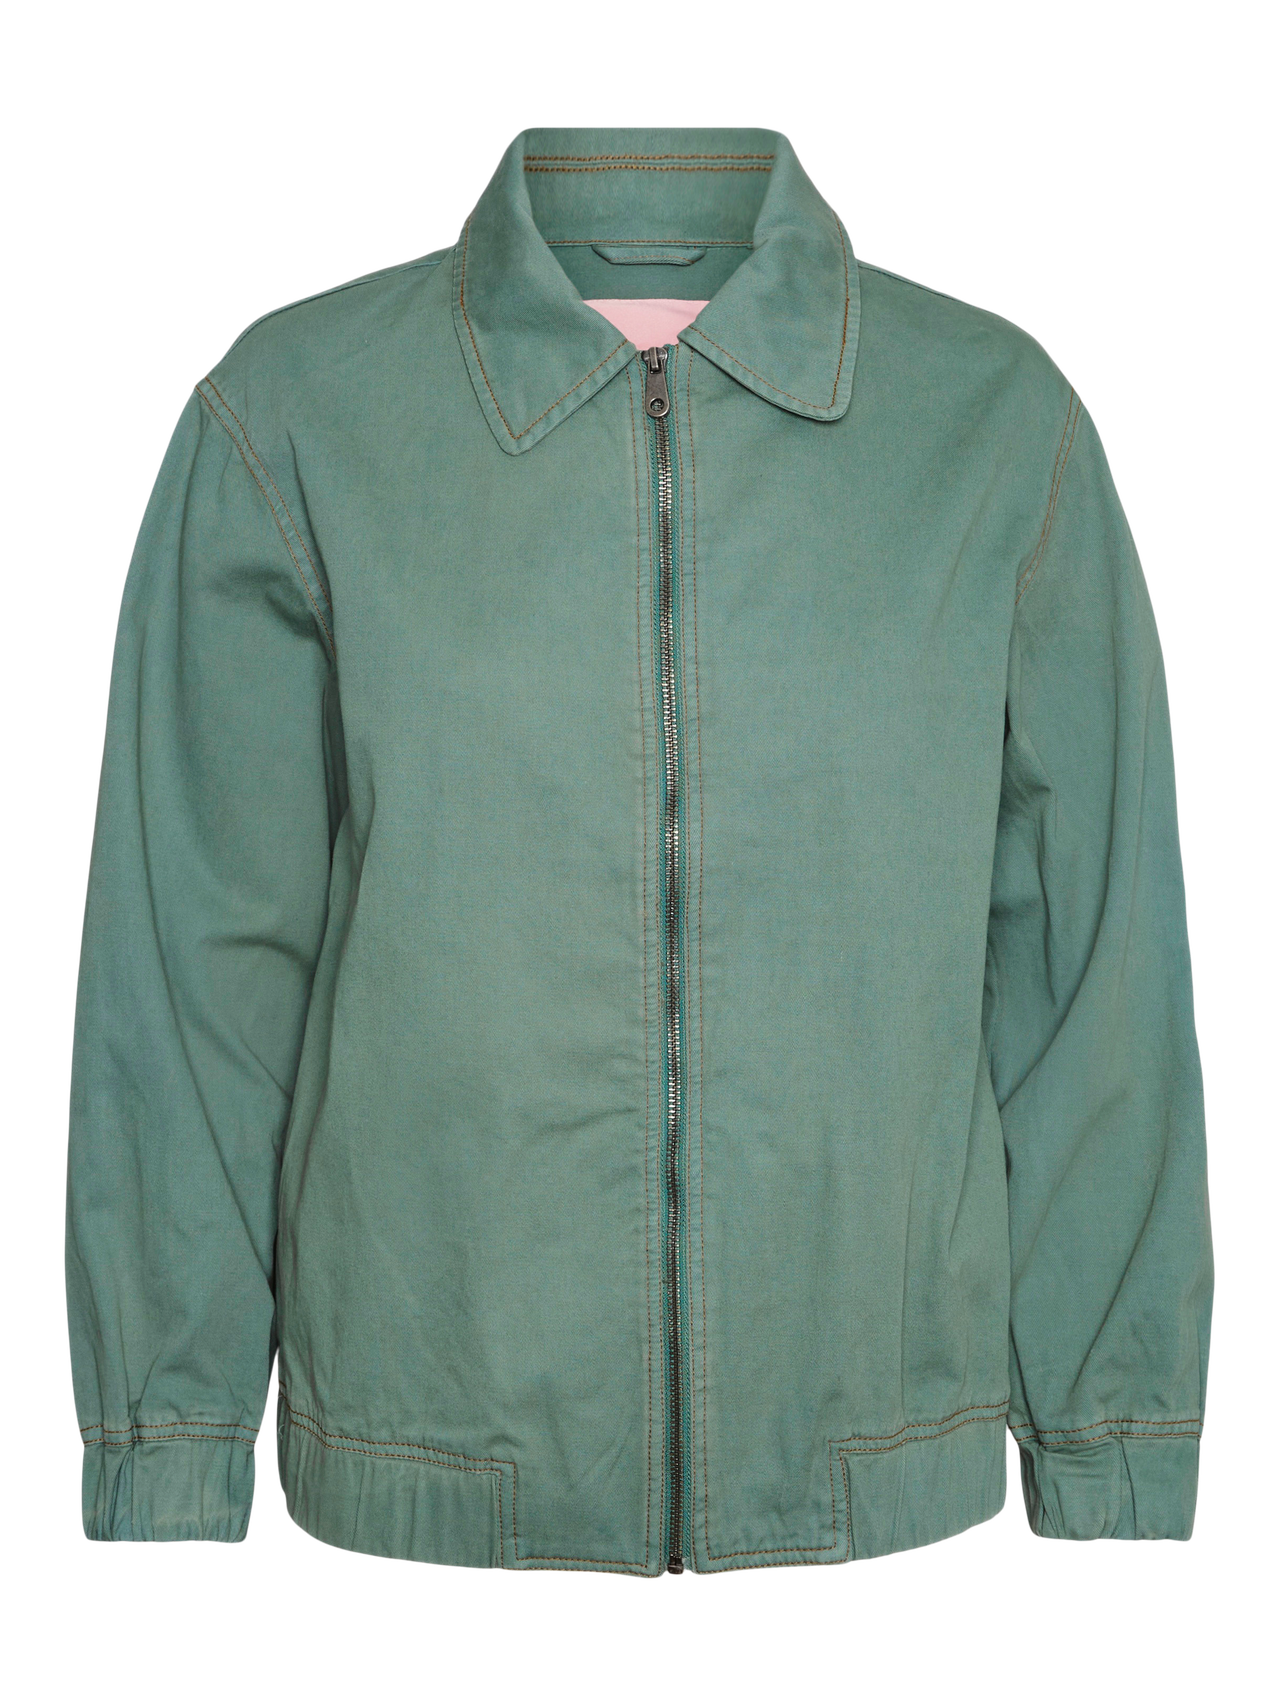 Vero Moda SOMETHING NEW PROJECT; CHLOE FRATER  Jacket -Watercress - 10301736